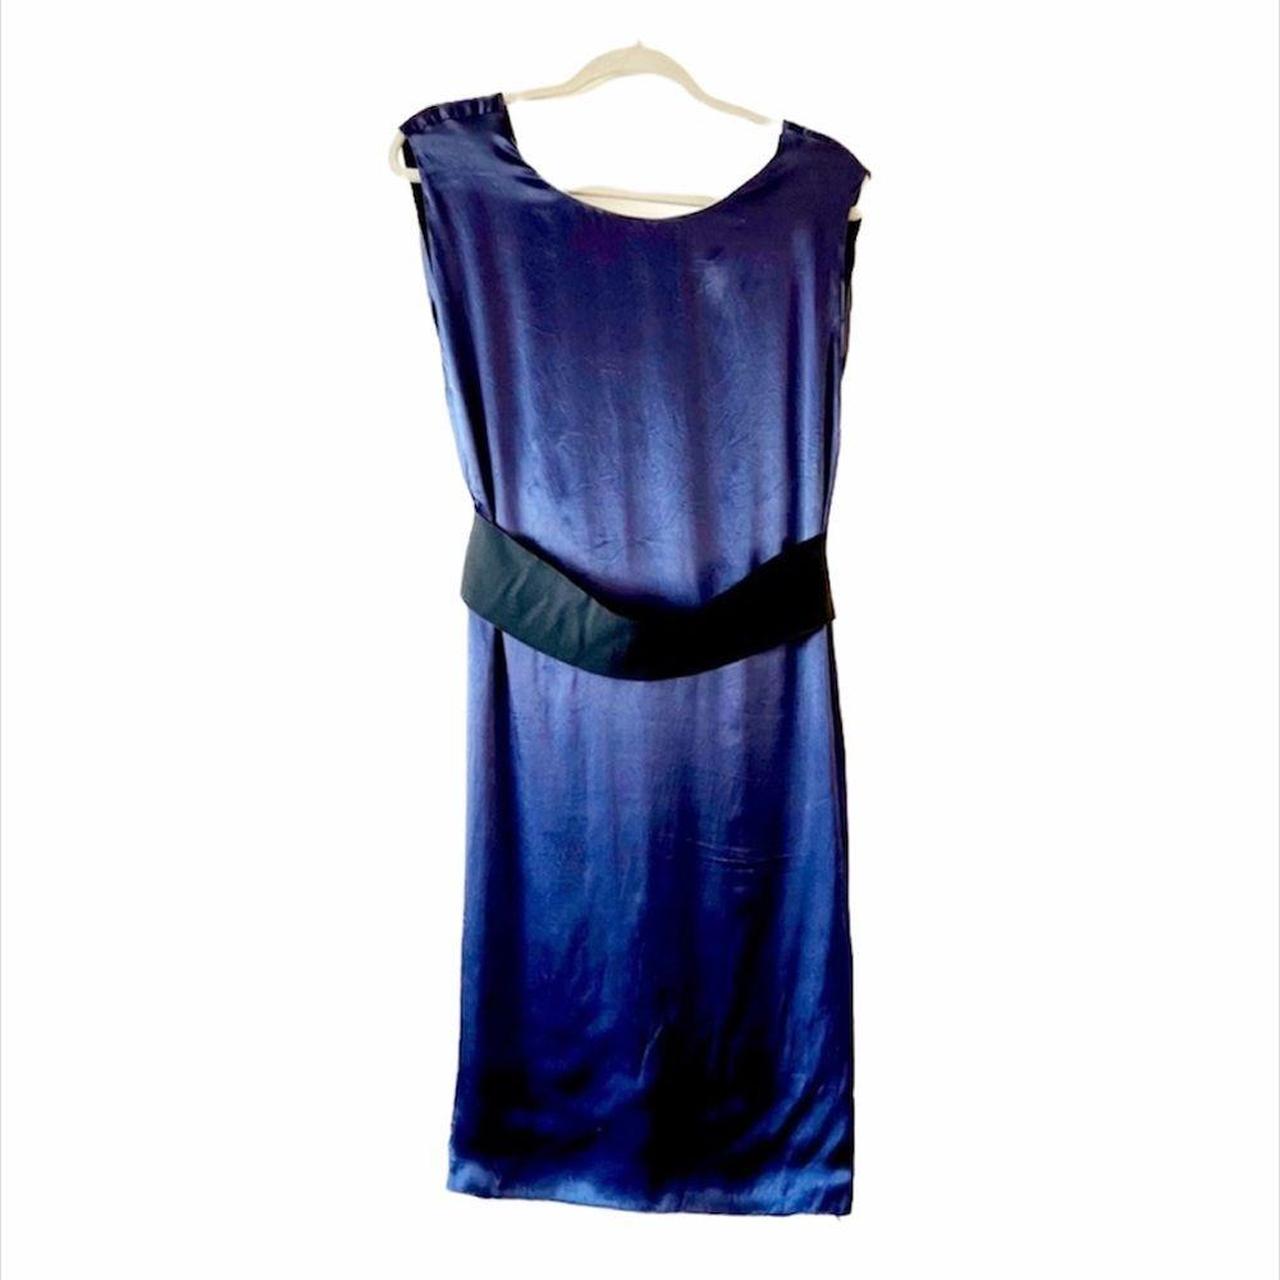 Lanvin Women's Blue and Black Dress